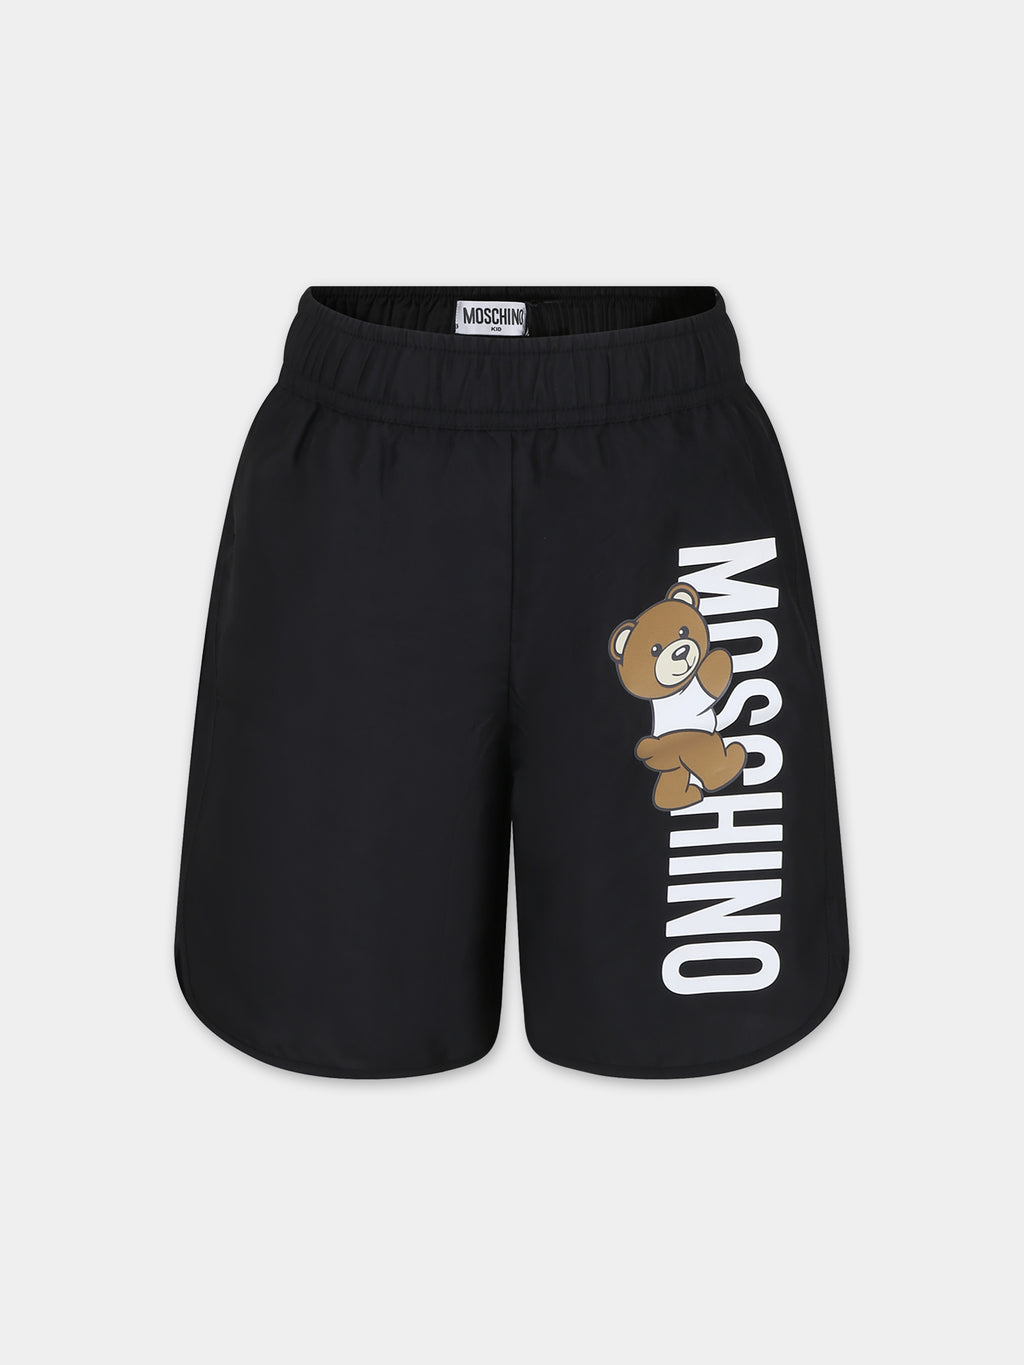 Black swim shorts for boy with Teddy Bear and logo